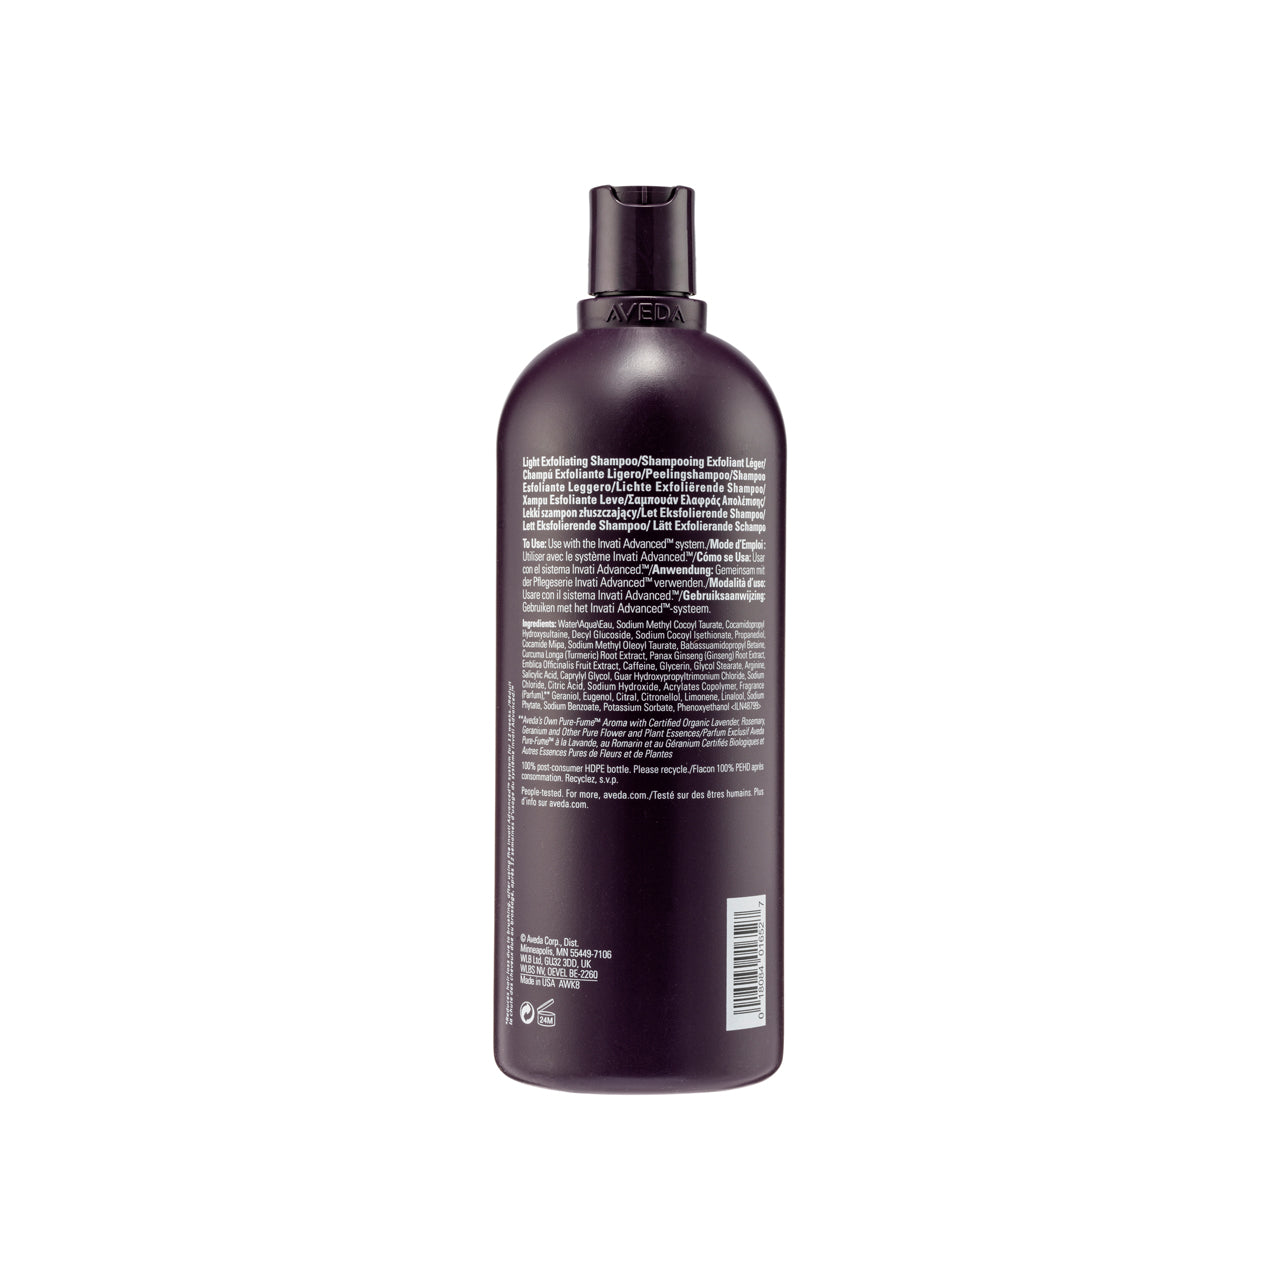 Aveda Invati Advancedtm Exfoliating Shampoo – Light 1000ML | Sasa Global eShop